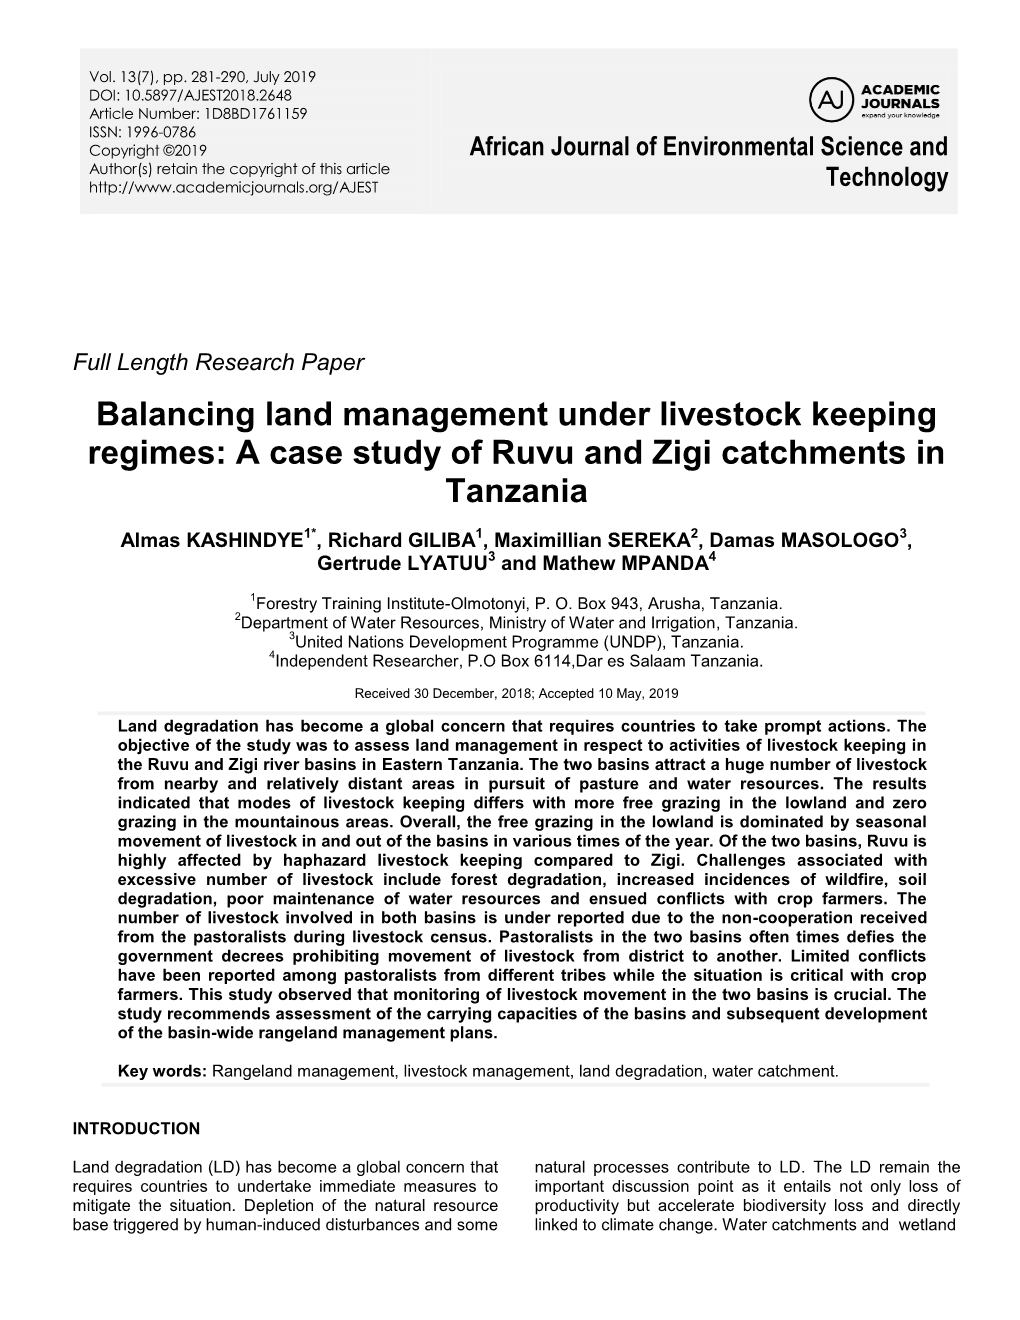 A Case Study of Ruvu and Zigi Catchments in Tanzania